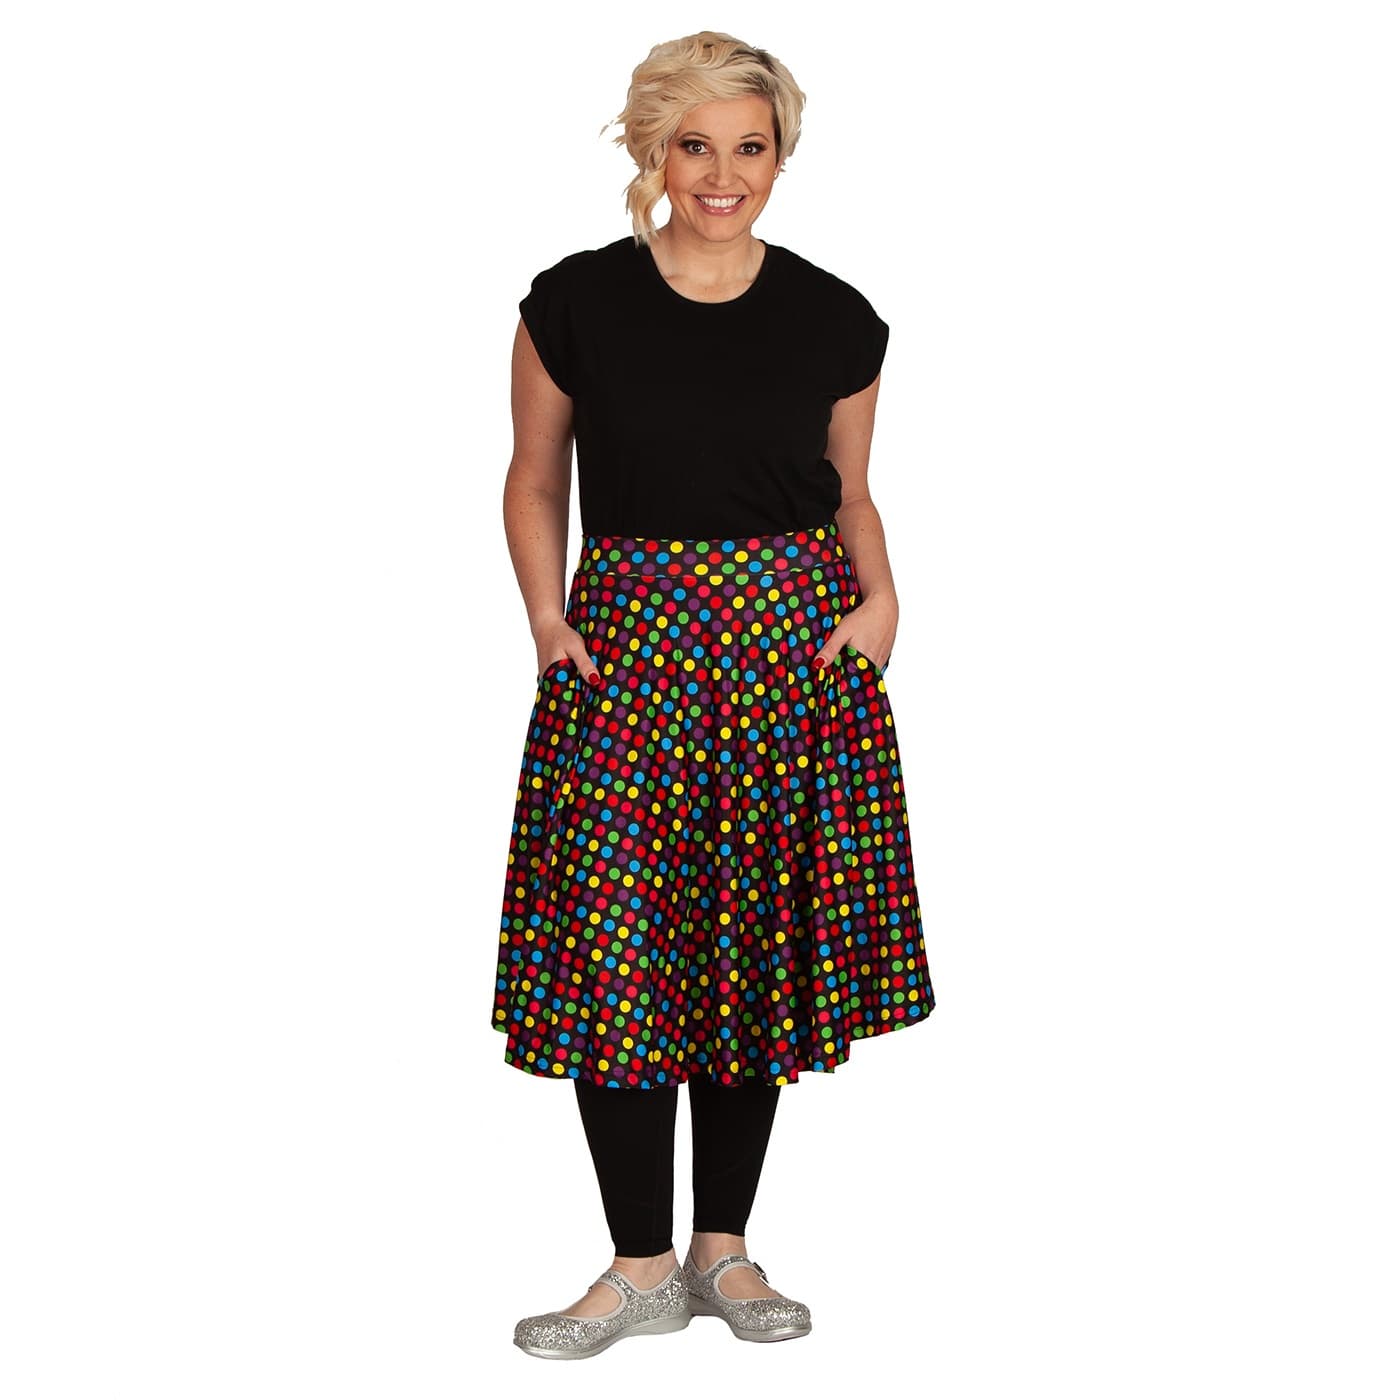 Confetti Swishy Skirt by RainbowsAndFairies.com.au (Rainbow Spots - Polka Dots - Colourful - Circle Skirt With Pockets - Mod Retro) - SKU: CL_SWISH_CONFT_ORG - Pic-07